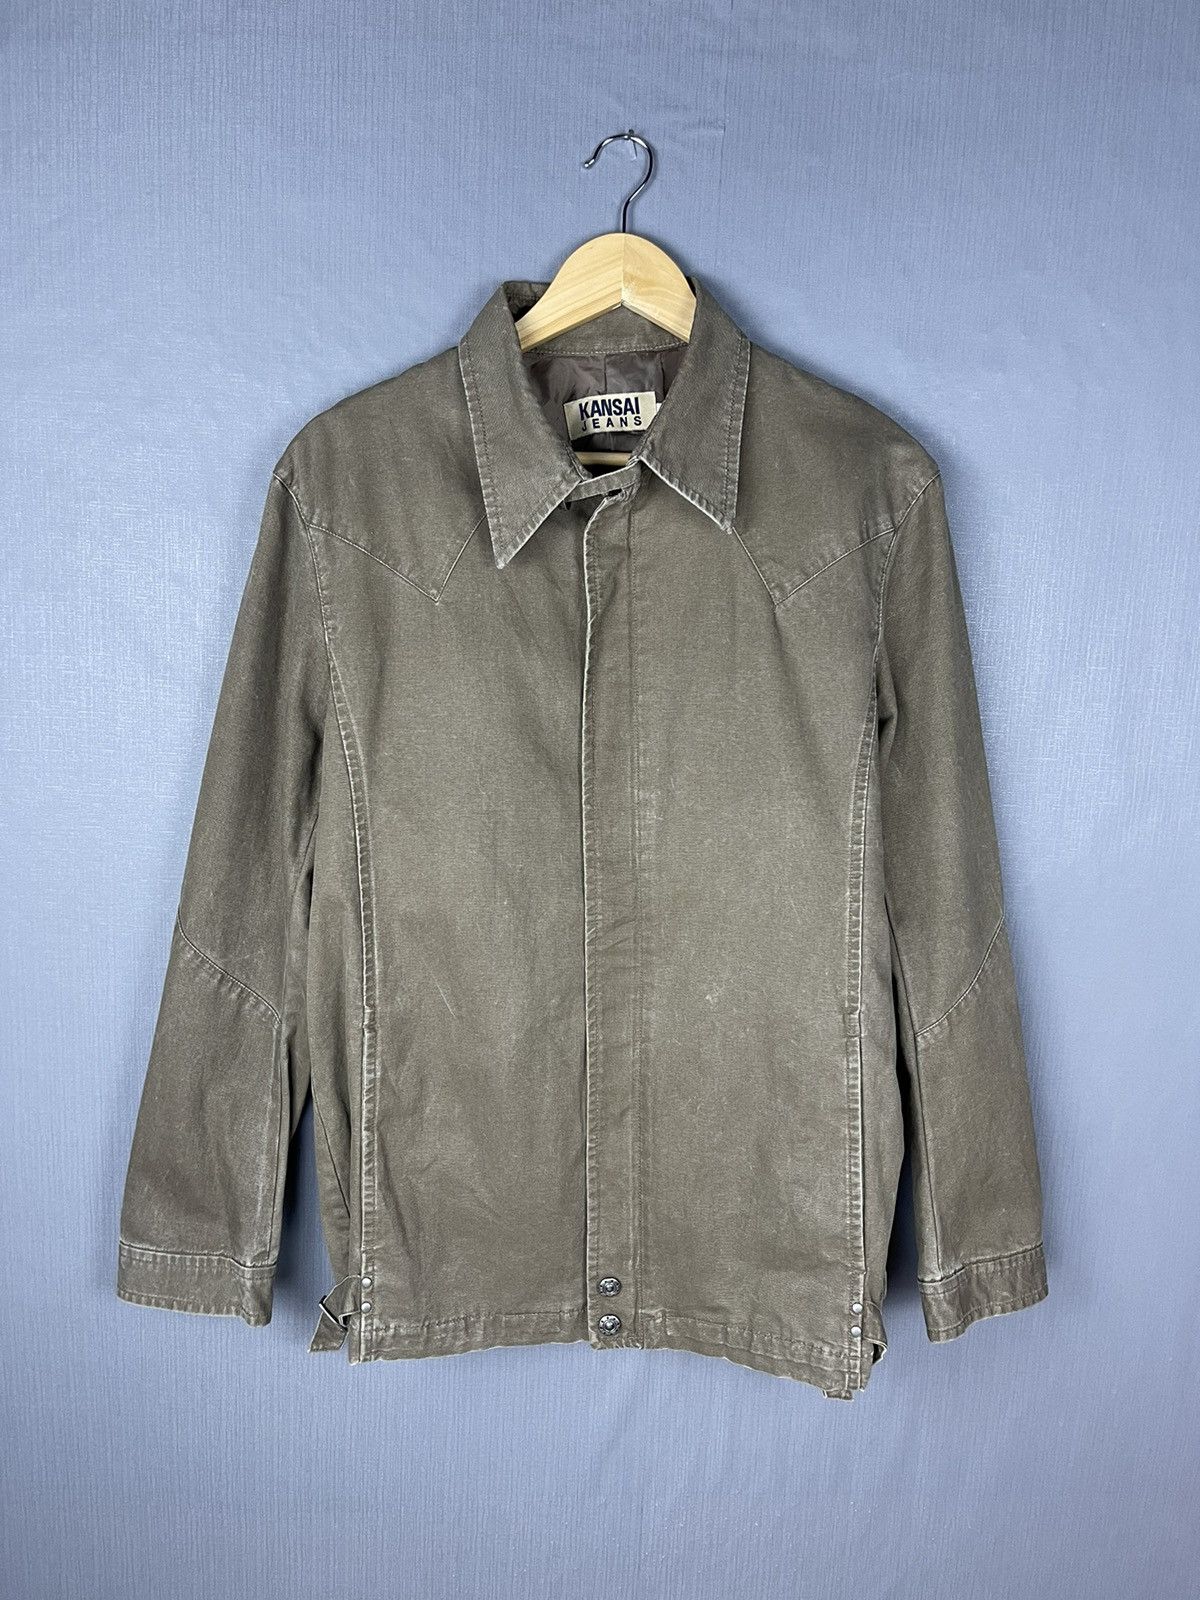 Vintage Vintage KANSAI JEANS Japanese Brand Zipper Jacket | Grailed